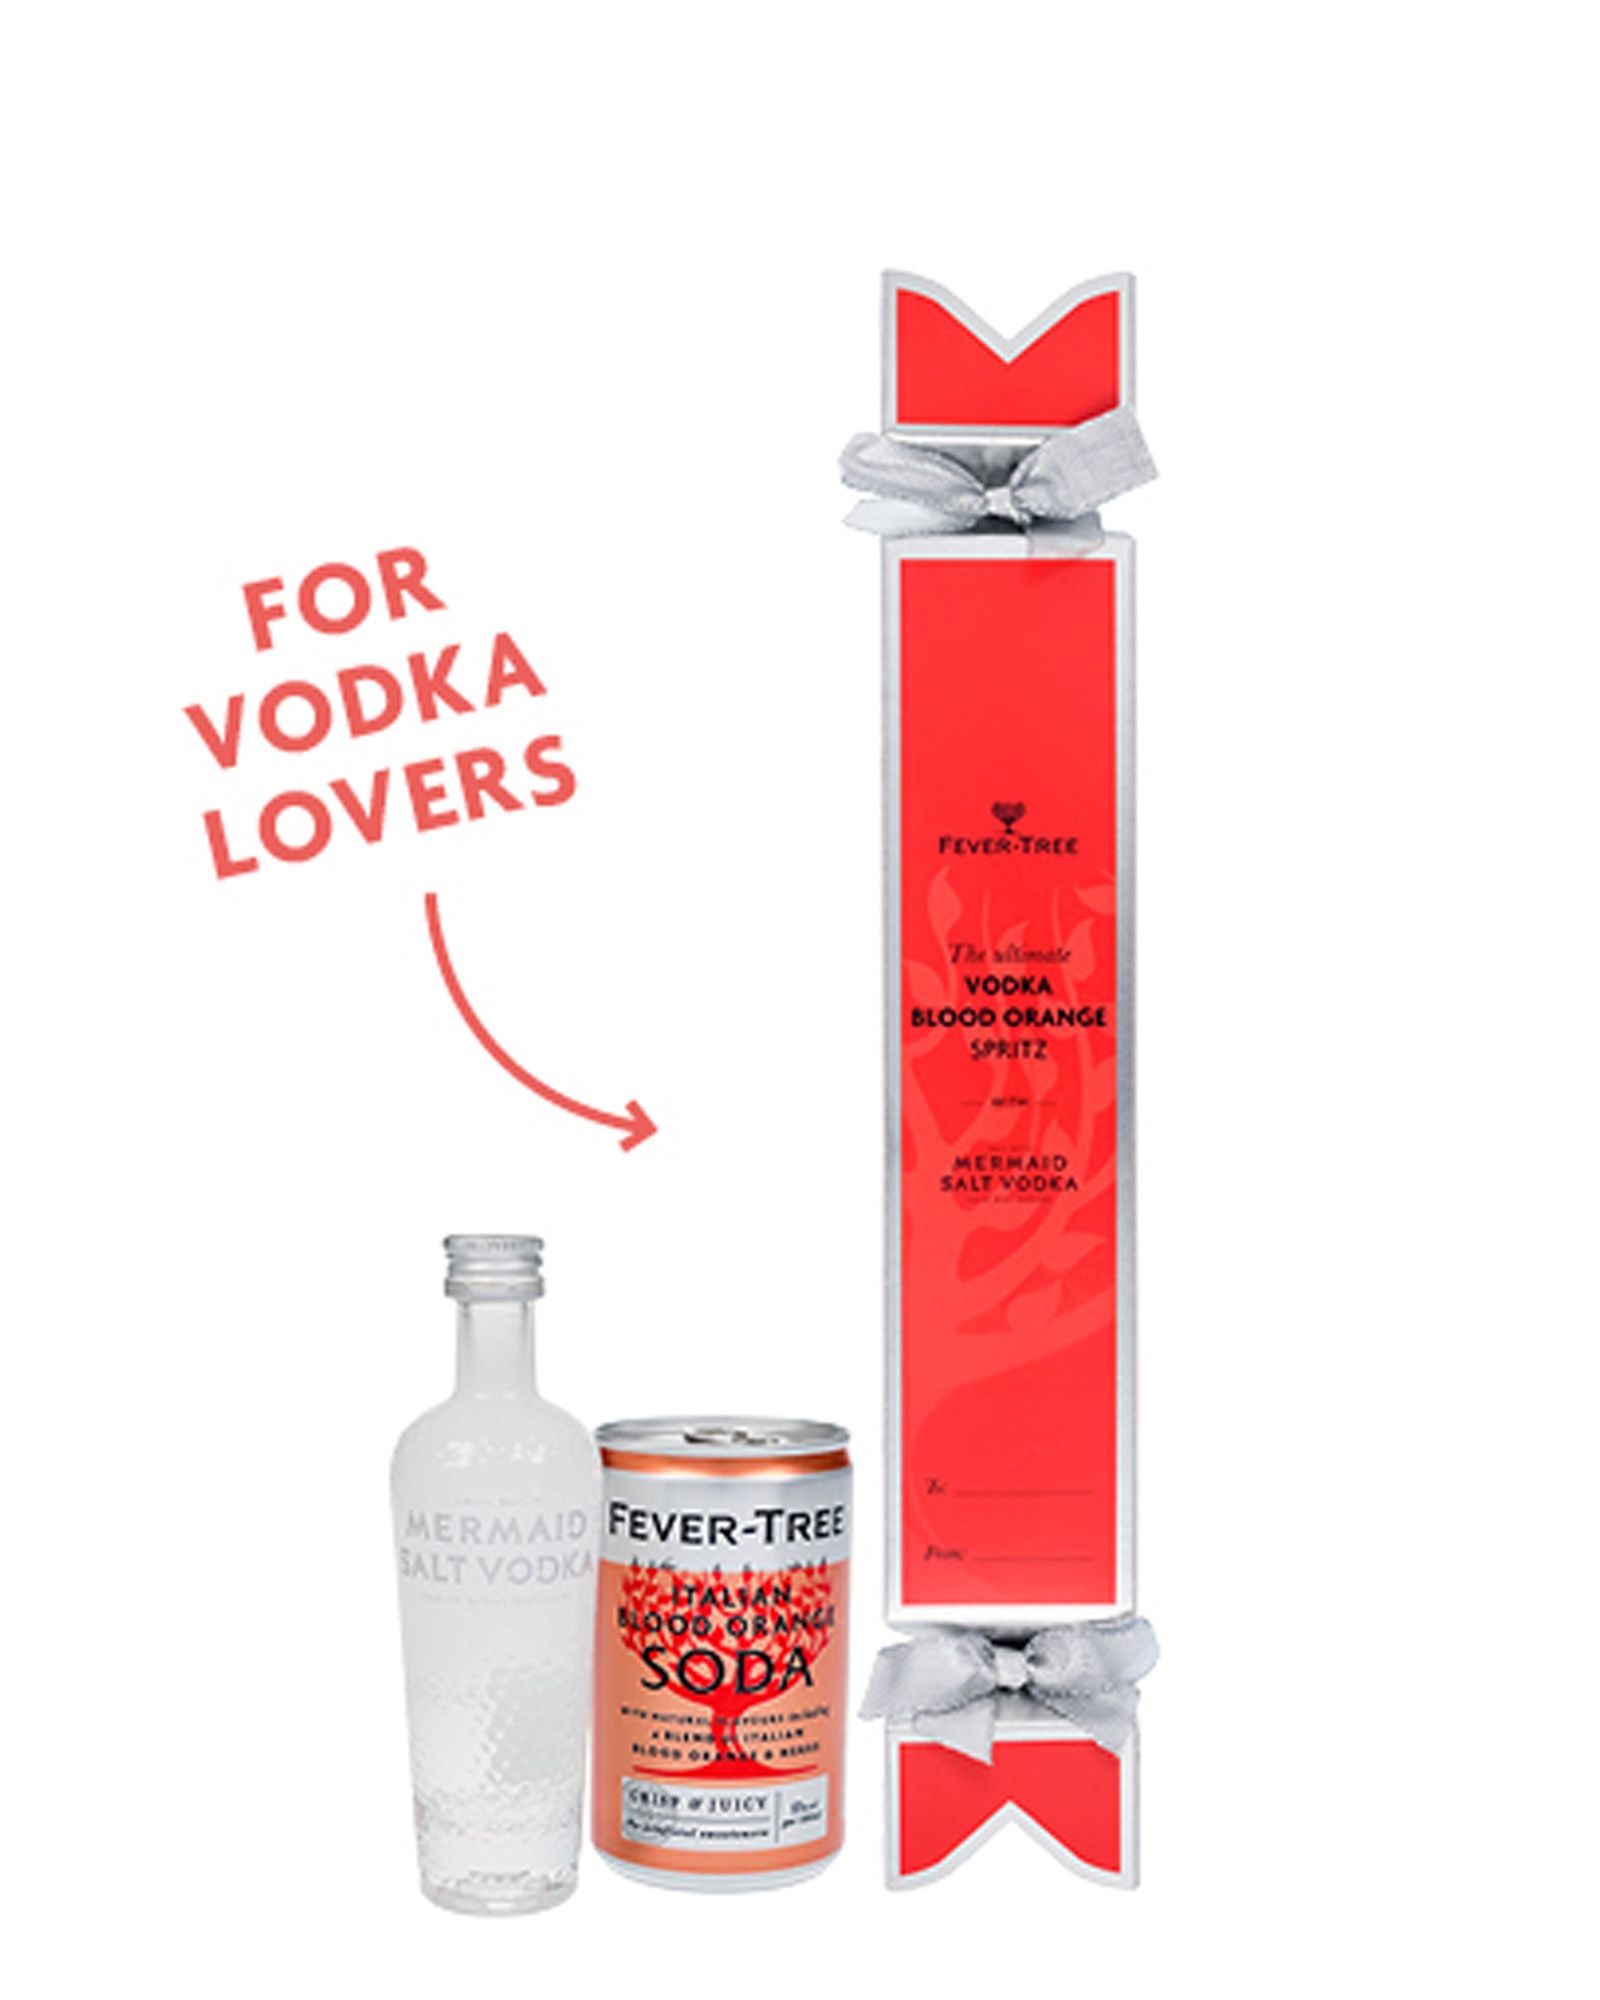 Ultimate Vodka Blood Orange Spritz